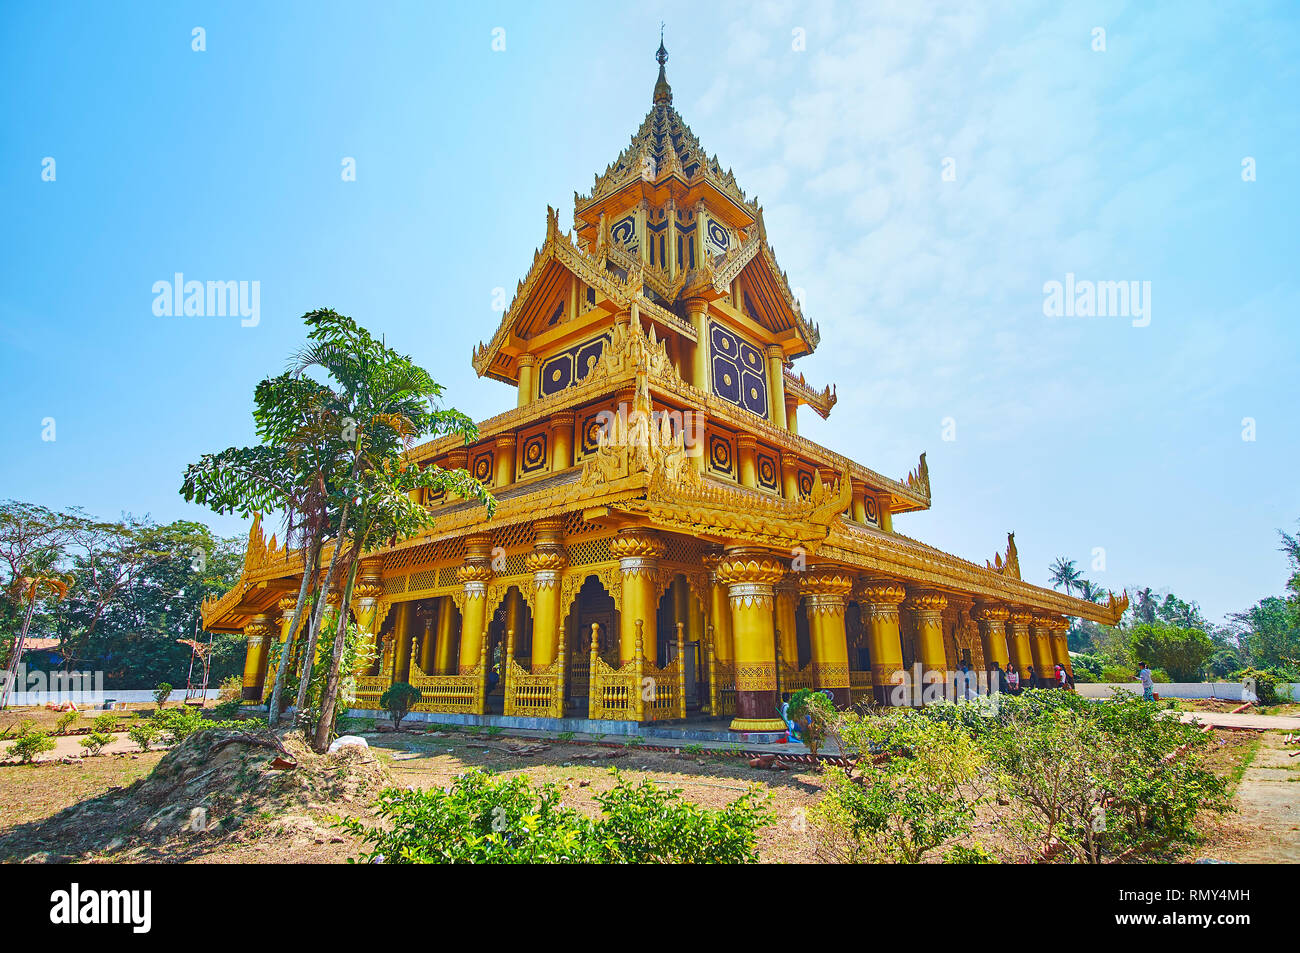 BAGO, MYANMAR - FEBRUARY 15, 2018: The gilded Bee (Bhammayarthana) Throne Hall of Kanbawzathadi palace with many strong columns, nice carved wooden de Stock Photo